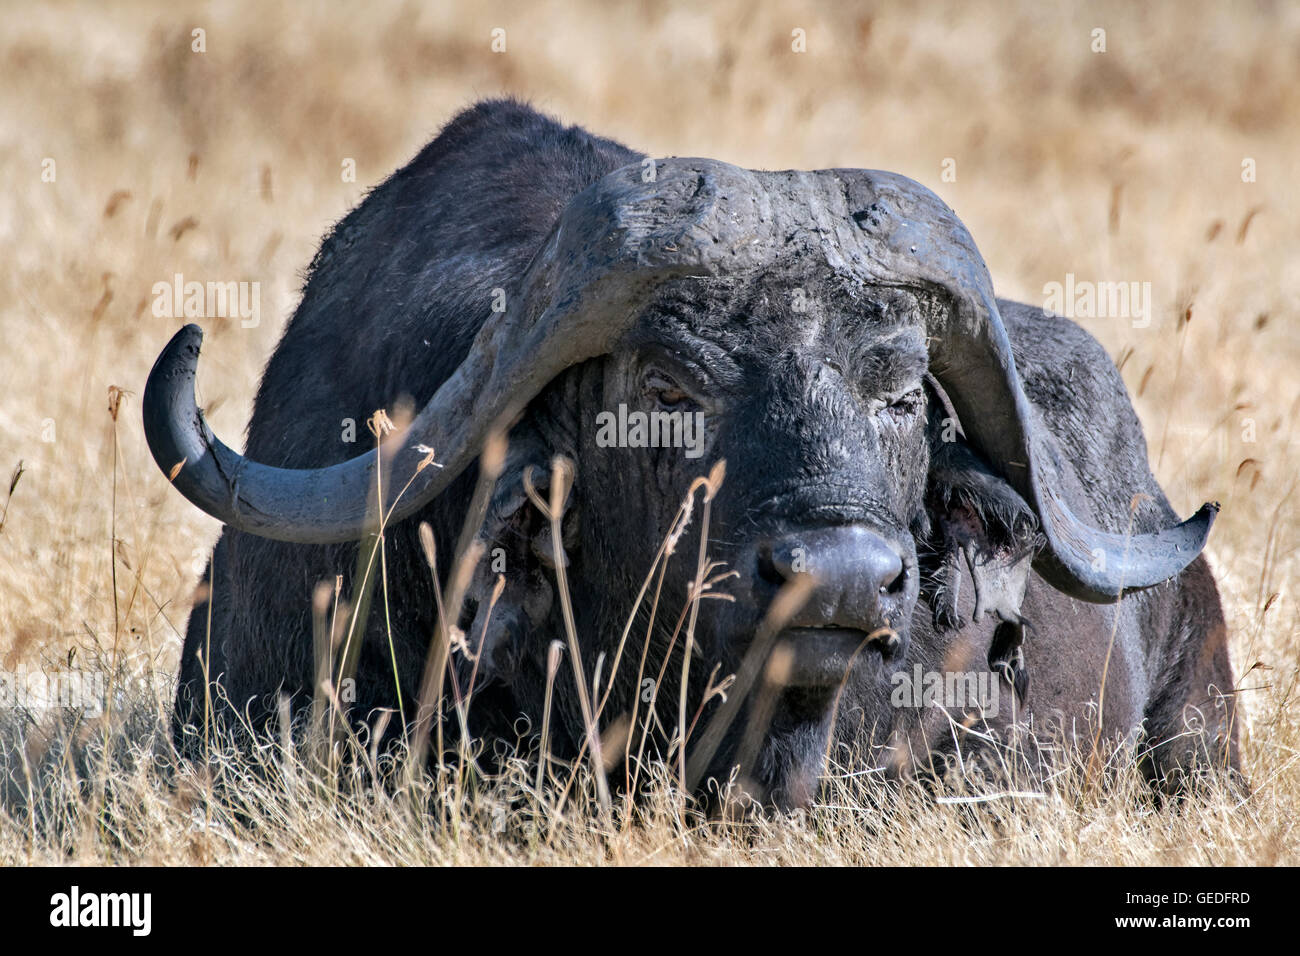 Tanzania, Ngorongoro crater, African Buffalo, Syncerus caffer Stock Photo